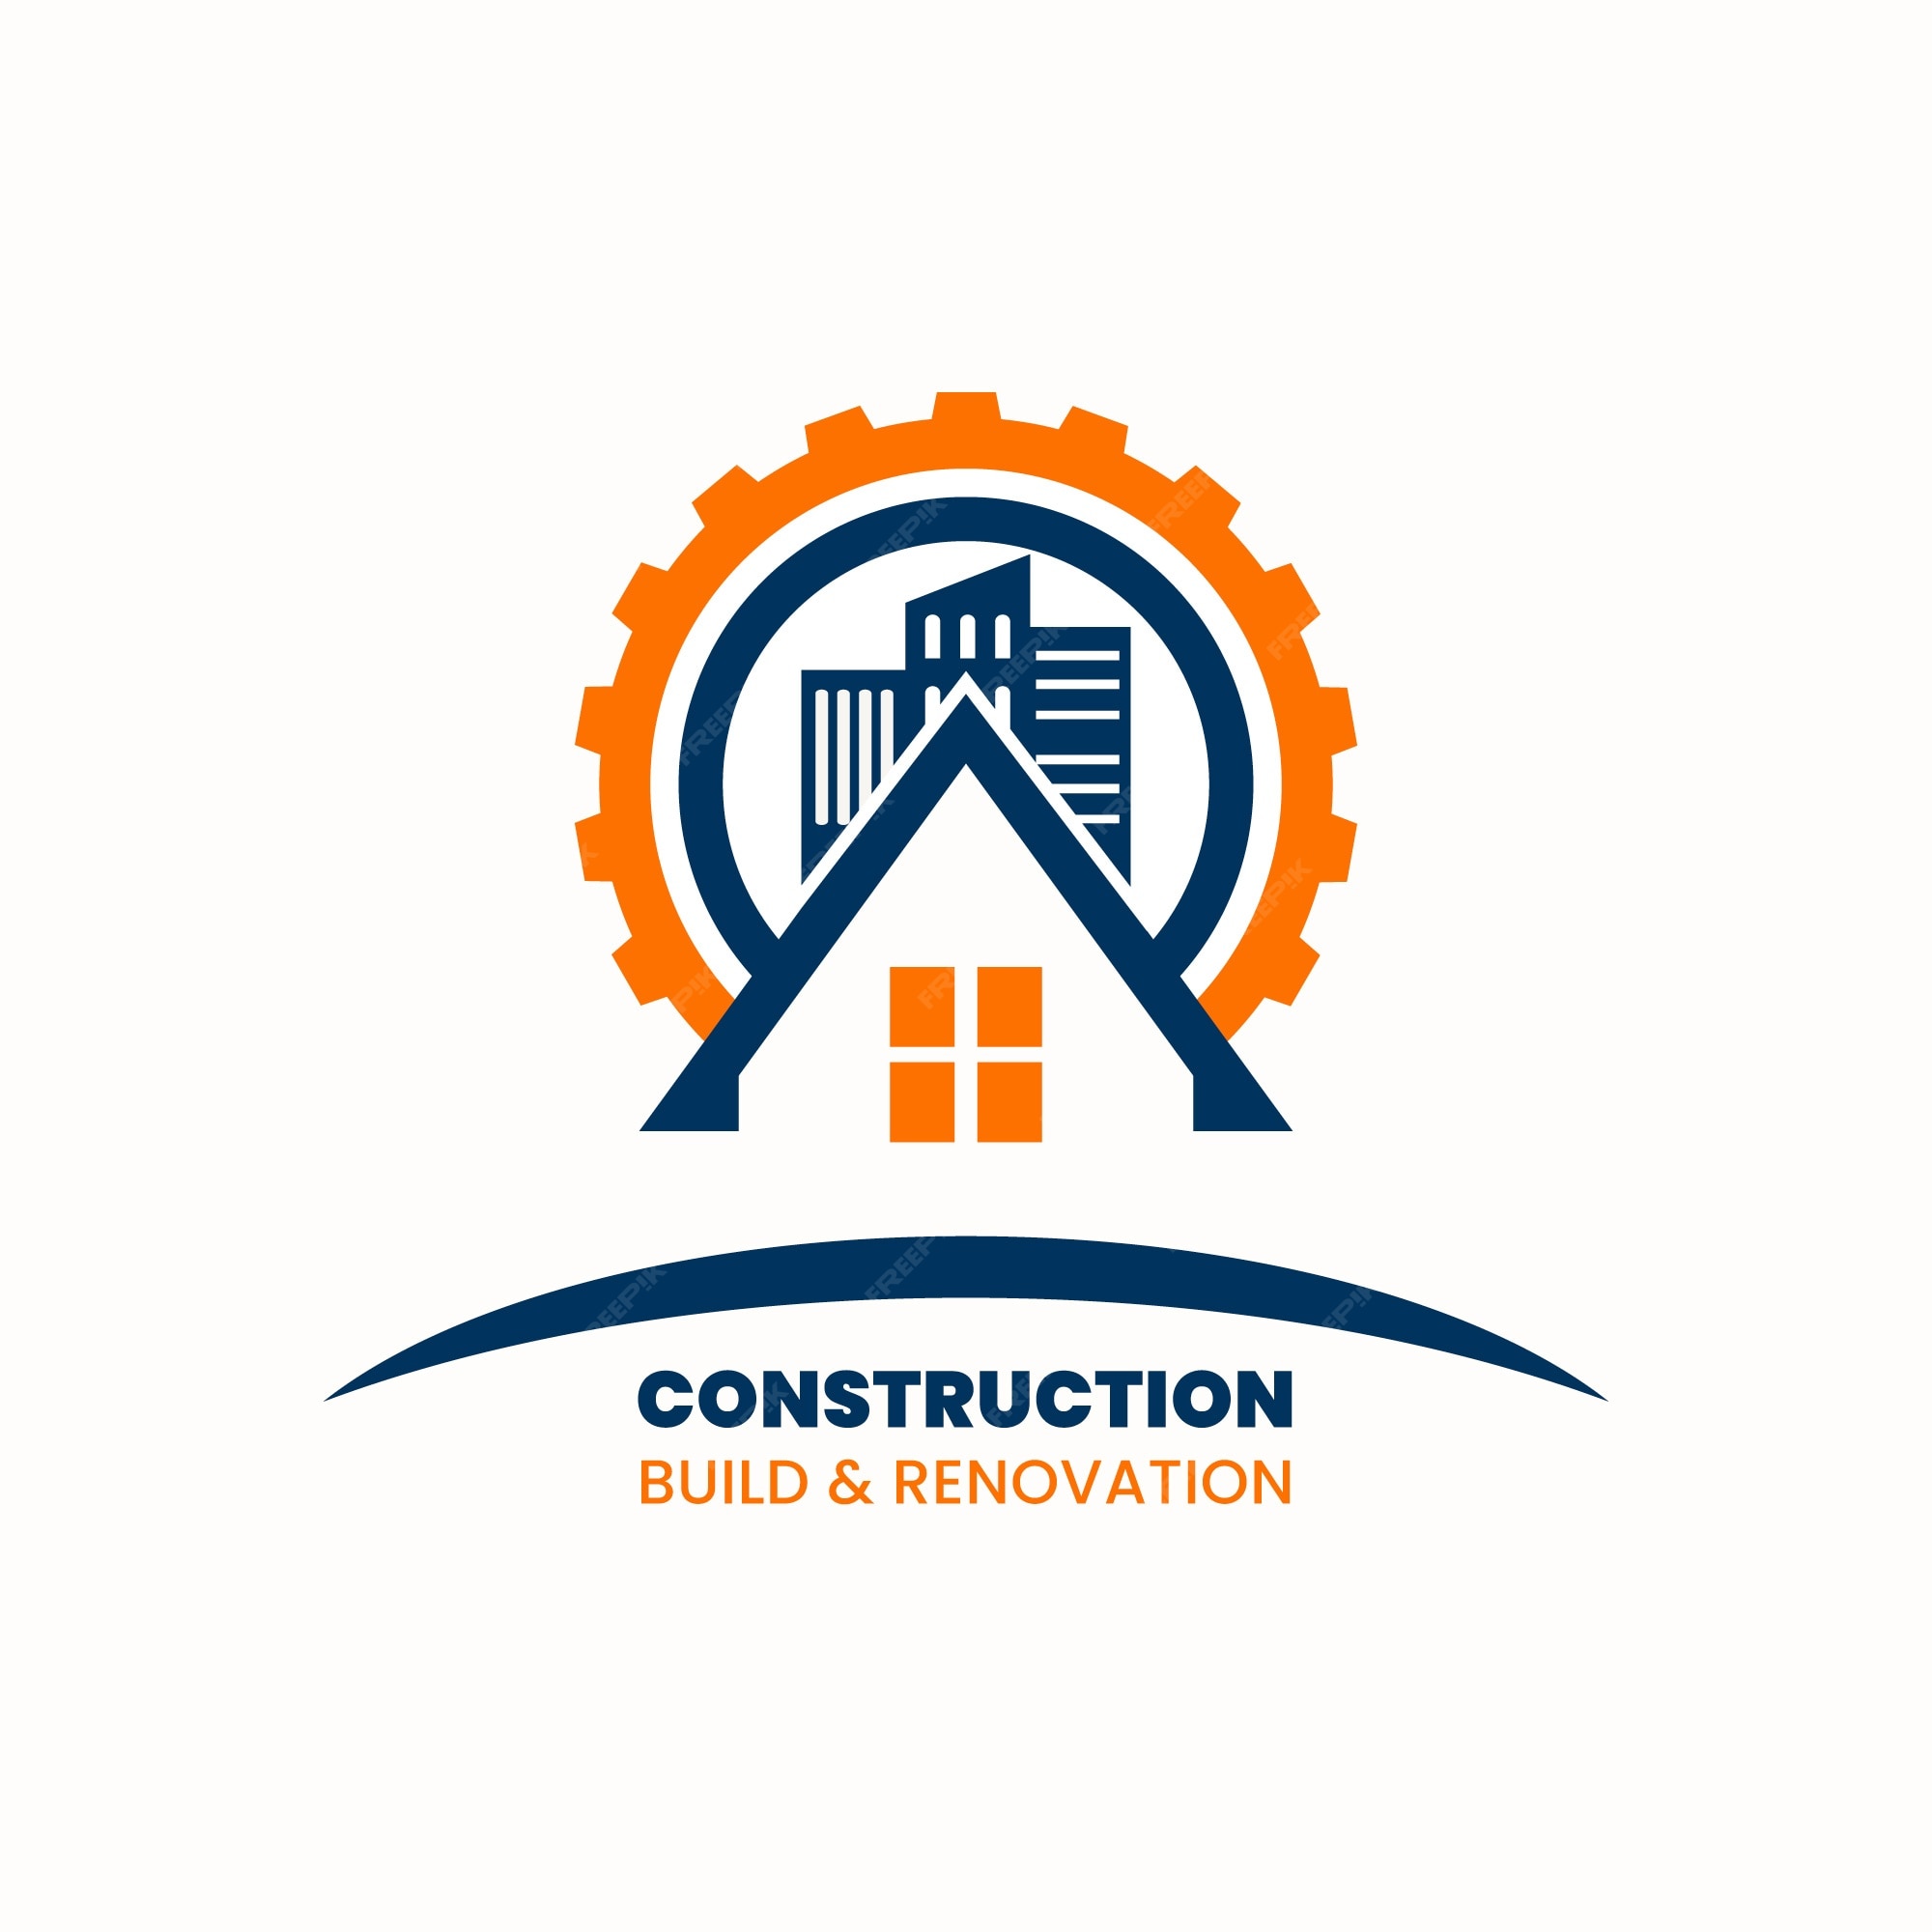 Construction Company Logo - Free Vectors & PSDs to Download